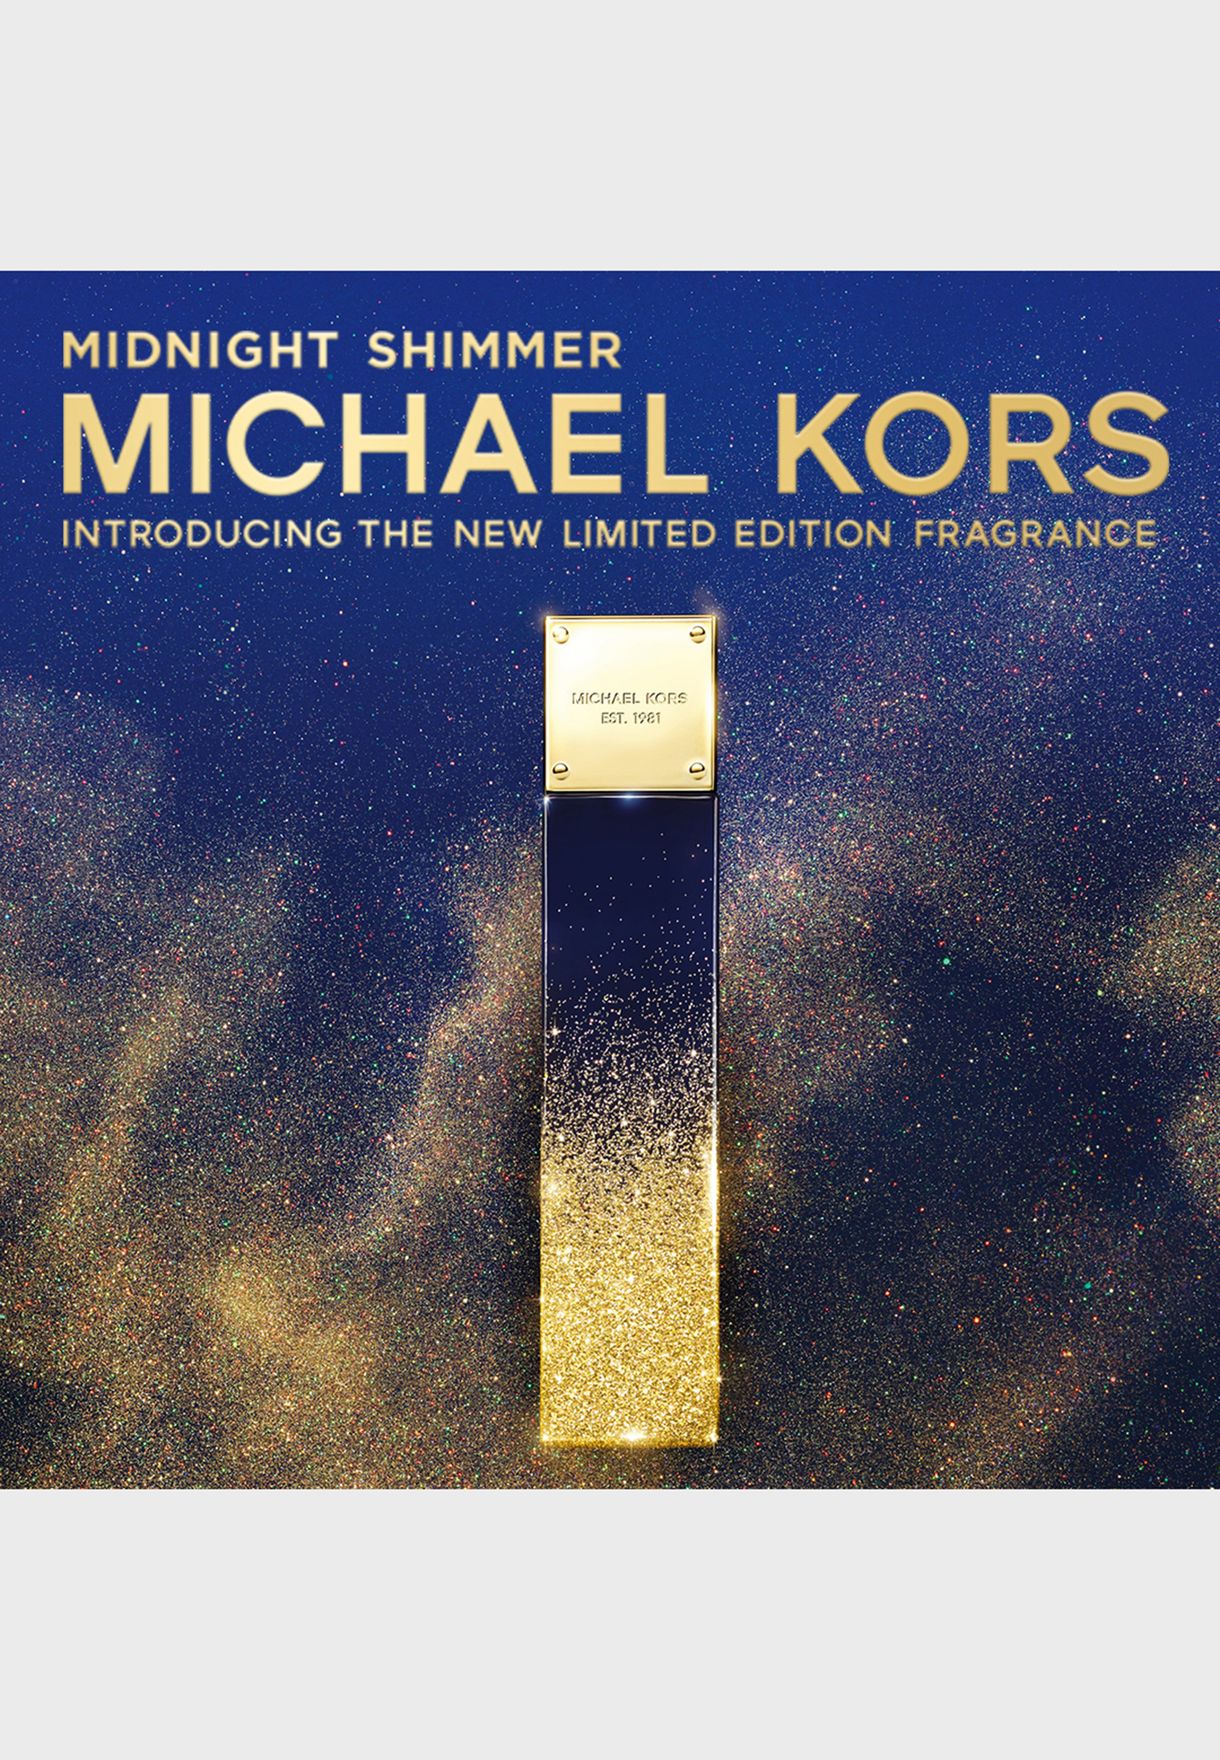 michael kors midnight shimmer 100ml price